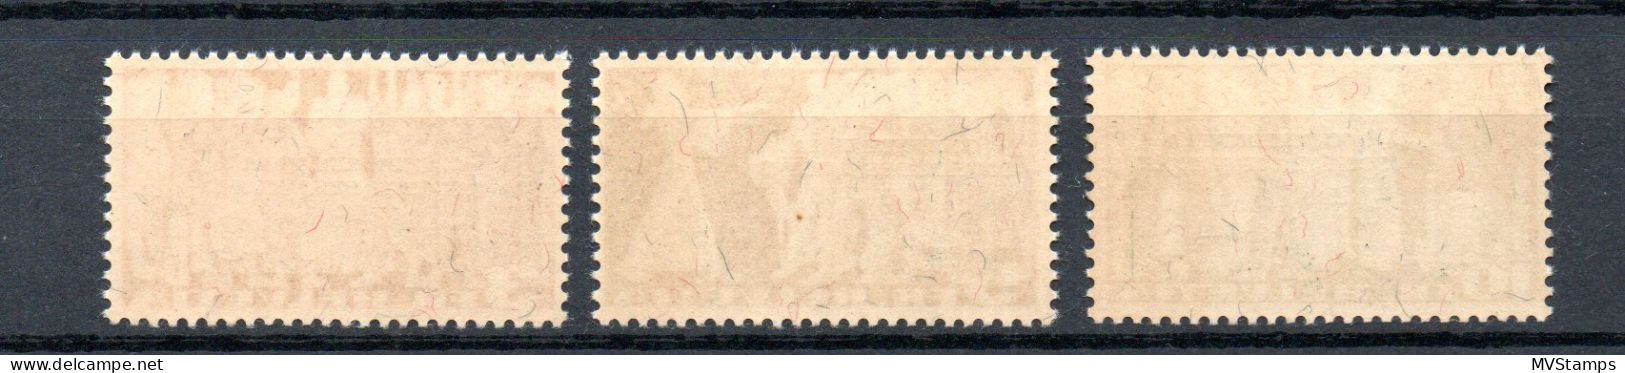 Switzerland 1939 Set Overprinted Service BIT/ILO Stamps (Michel 57/59) Used - Service